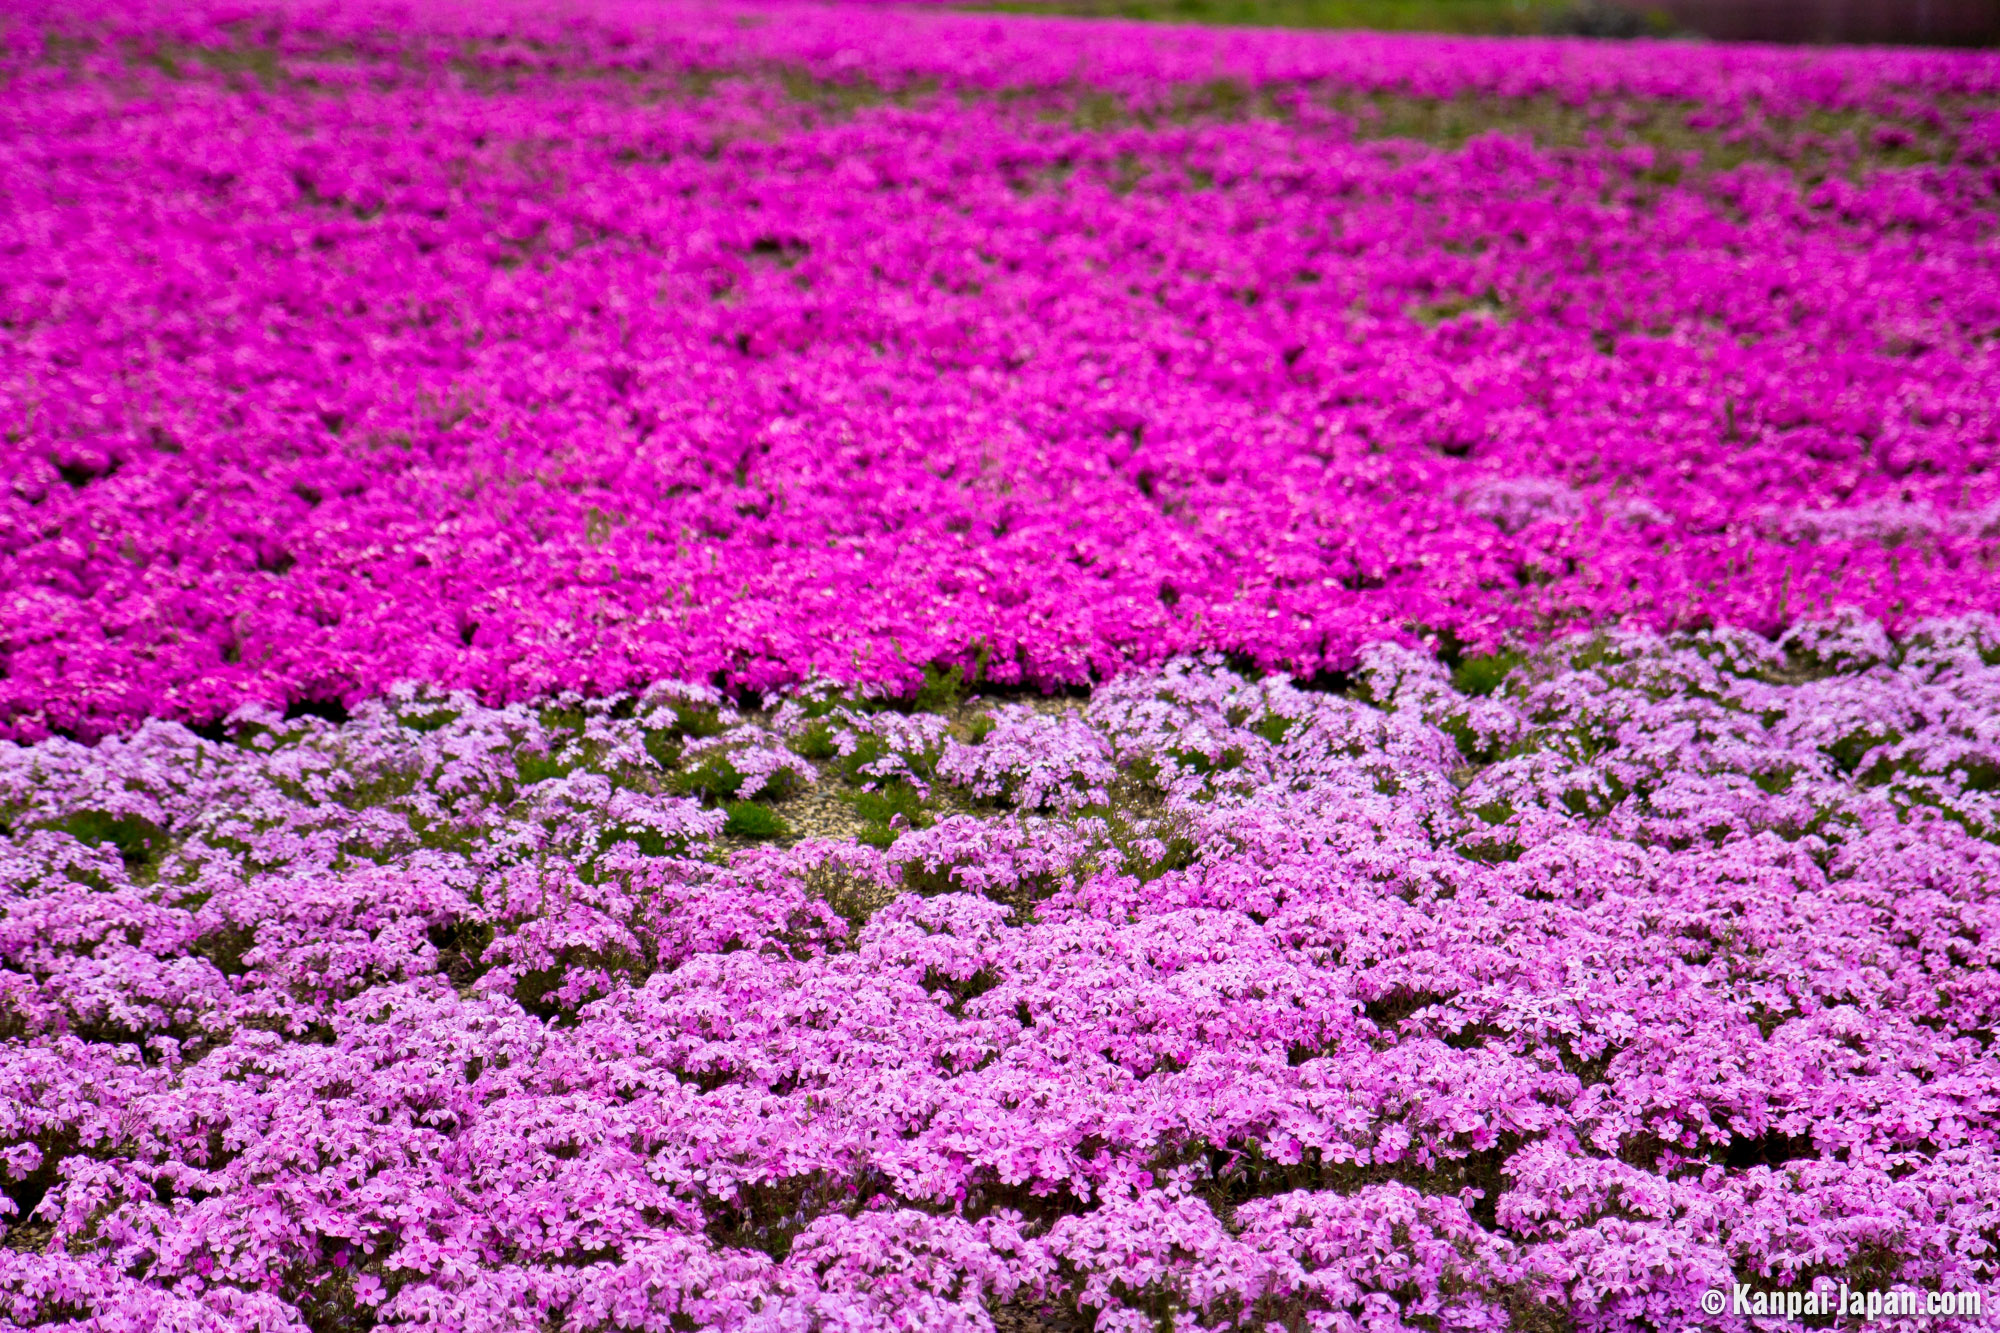 Fuji Shibazakura Matsuri - The Most Famous Pink Moss Festival